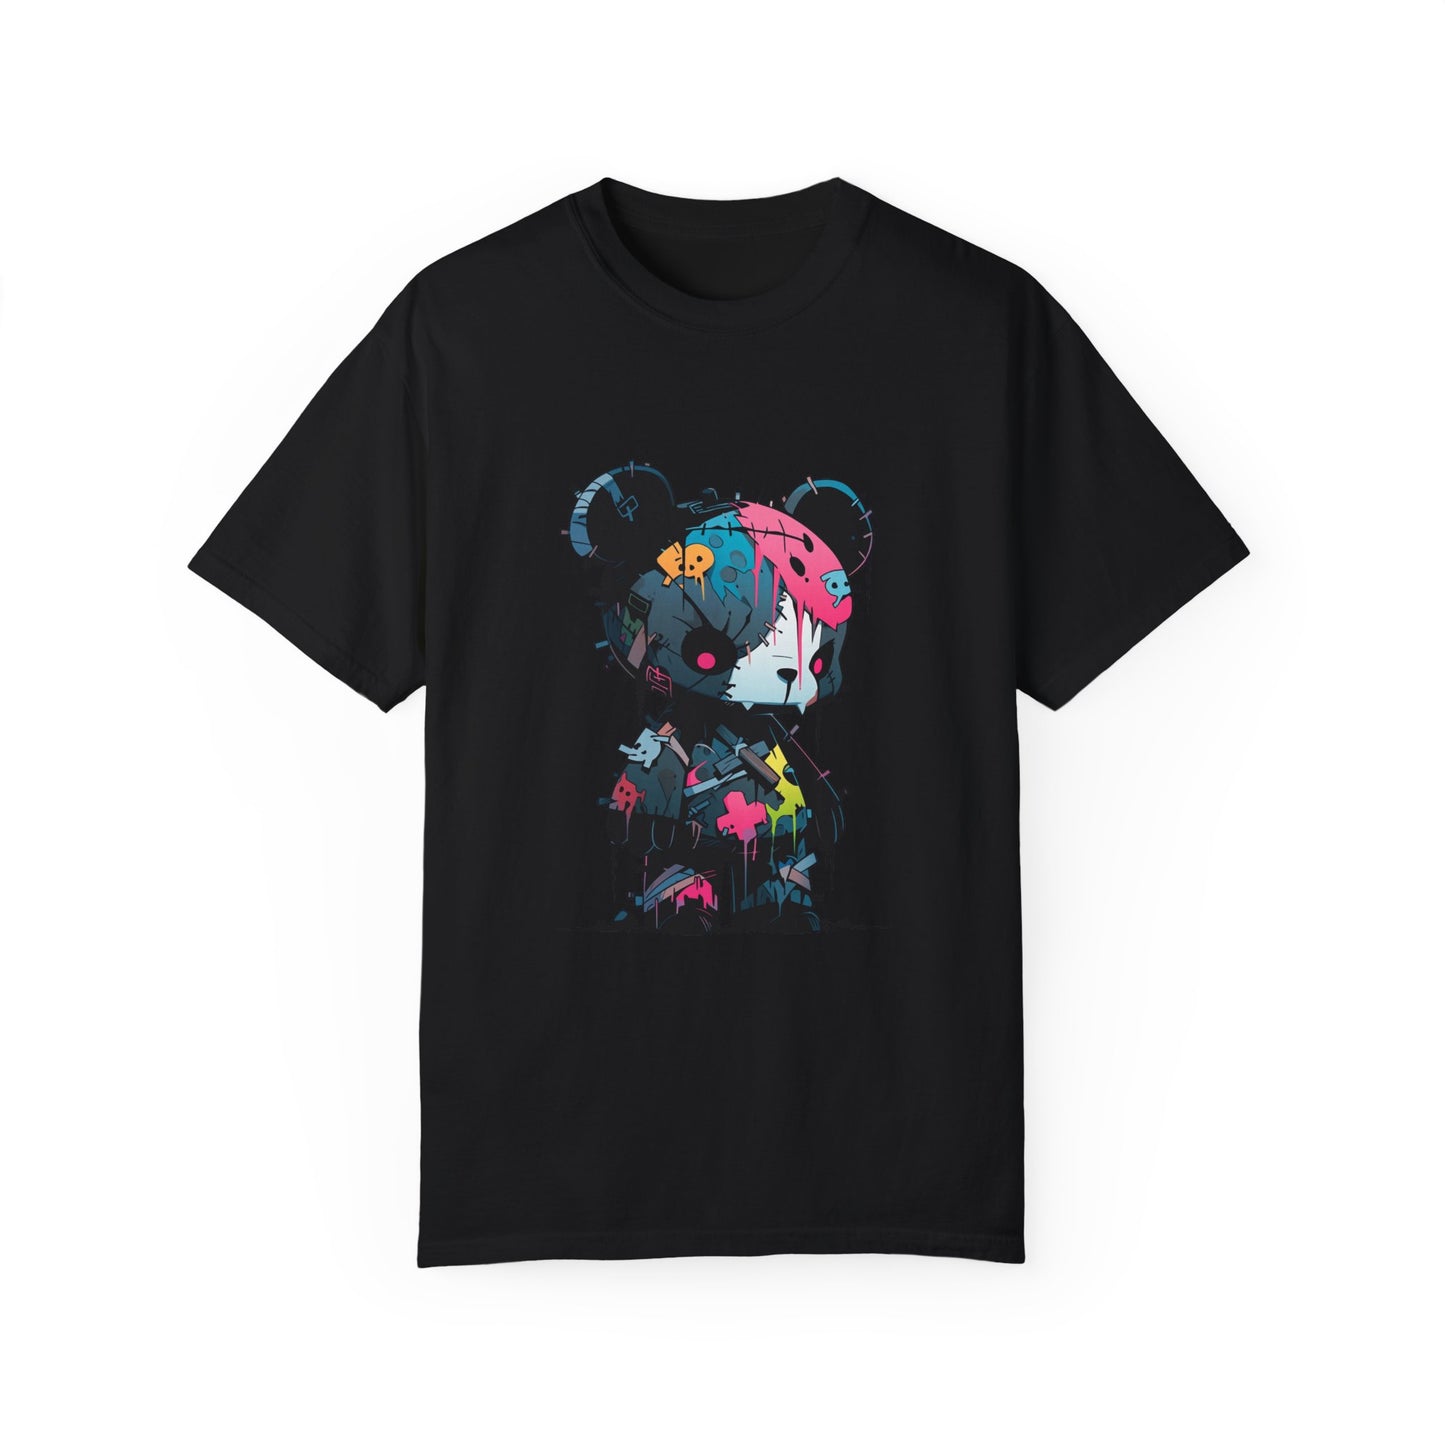 Hip Hop Teddy Bear Graphic Unisex Garment-dyed T-shirt Cotton Funny Humorous Graphic Soft Premium Unisex Men Women Black T-shirt Birthday Gift-2